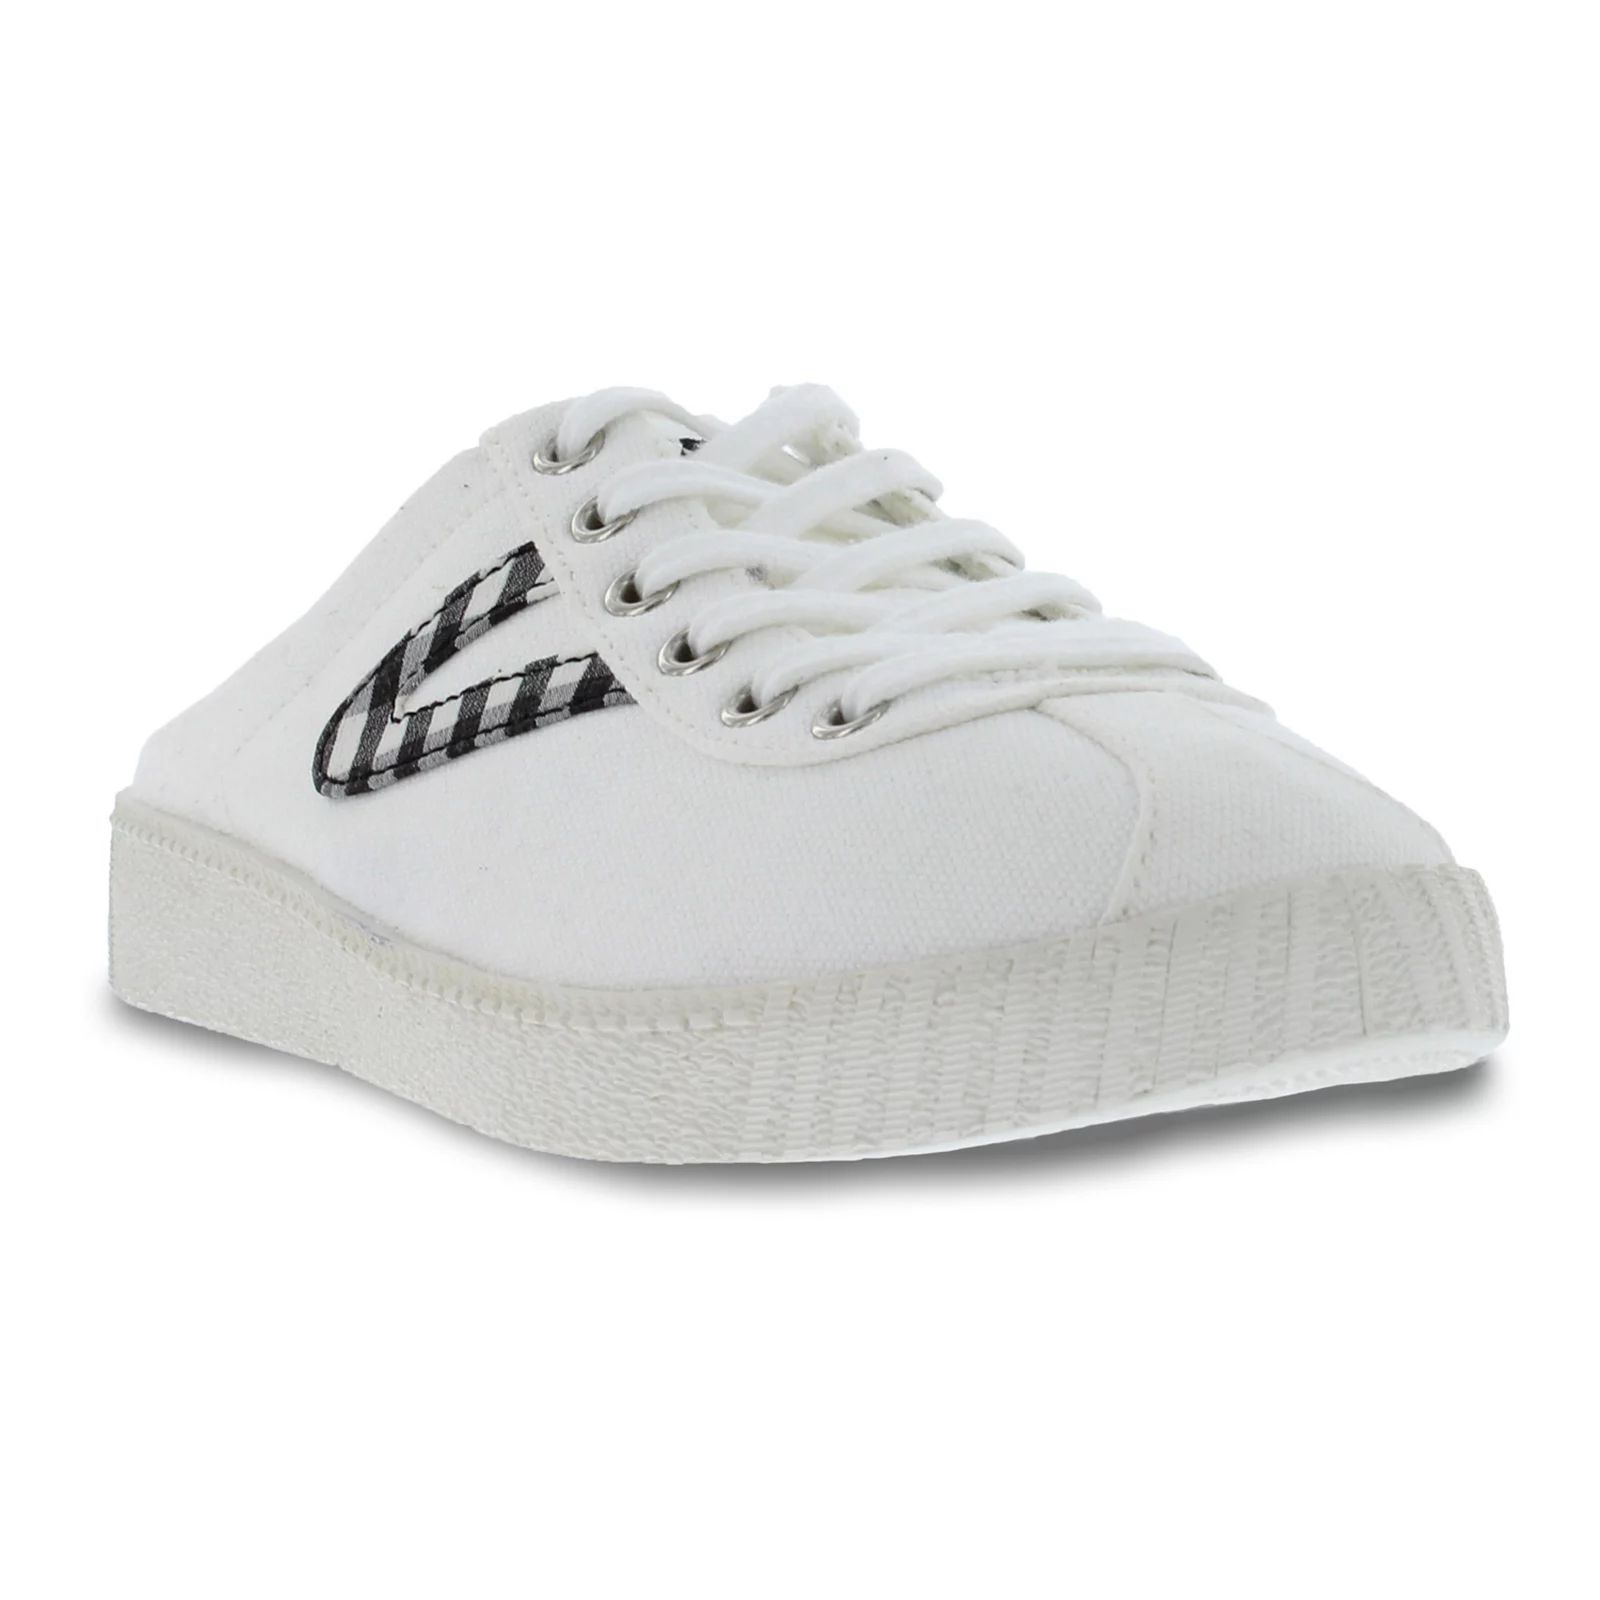 Tretorn Nylite Women's Slip-On Shoes, Size: 9, White Black | Kohl's